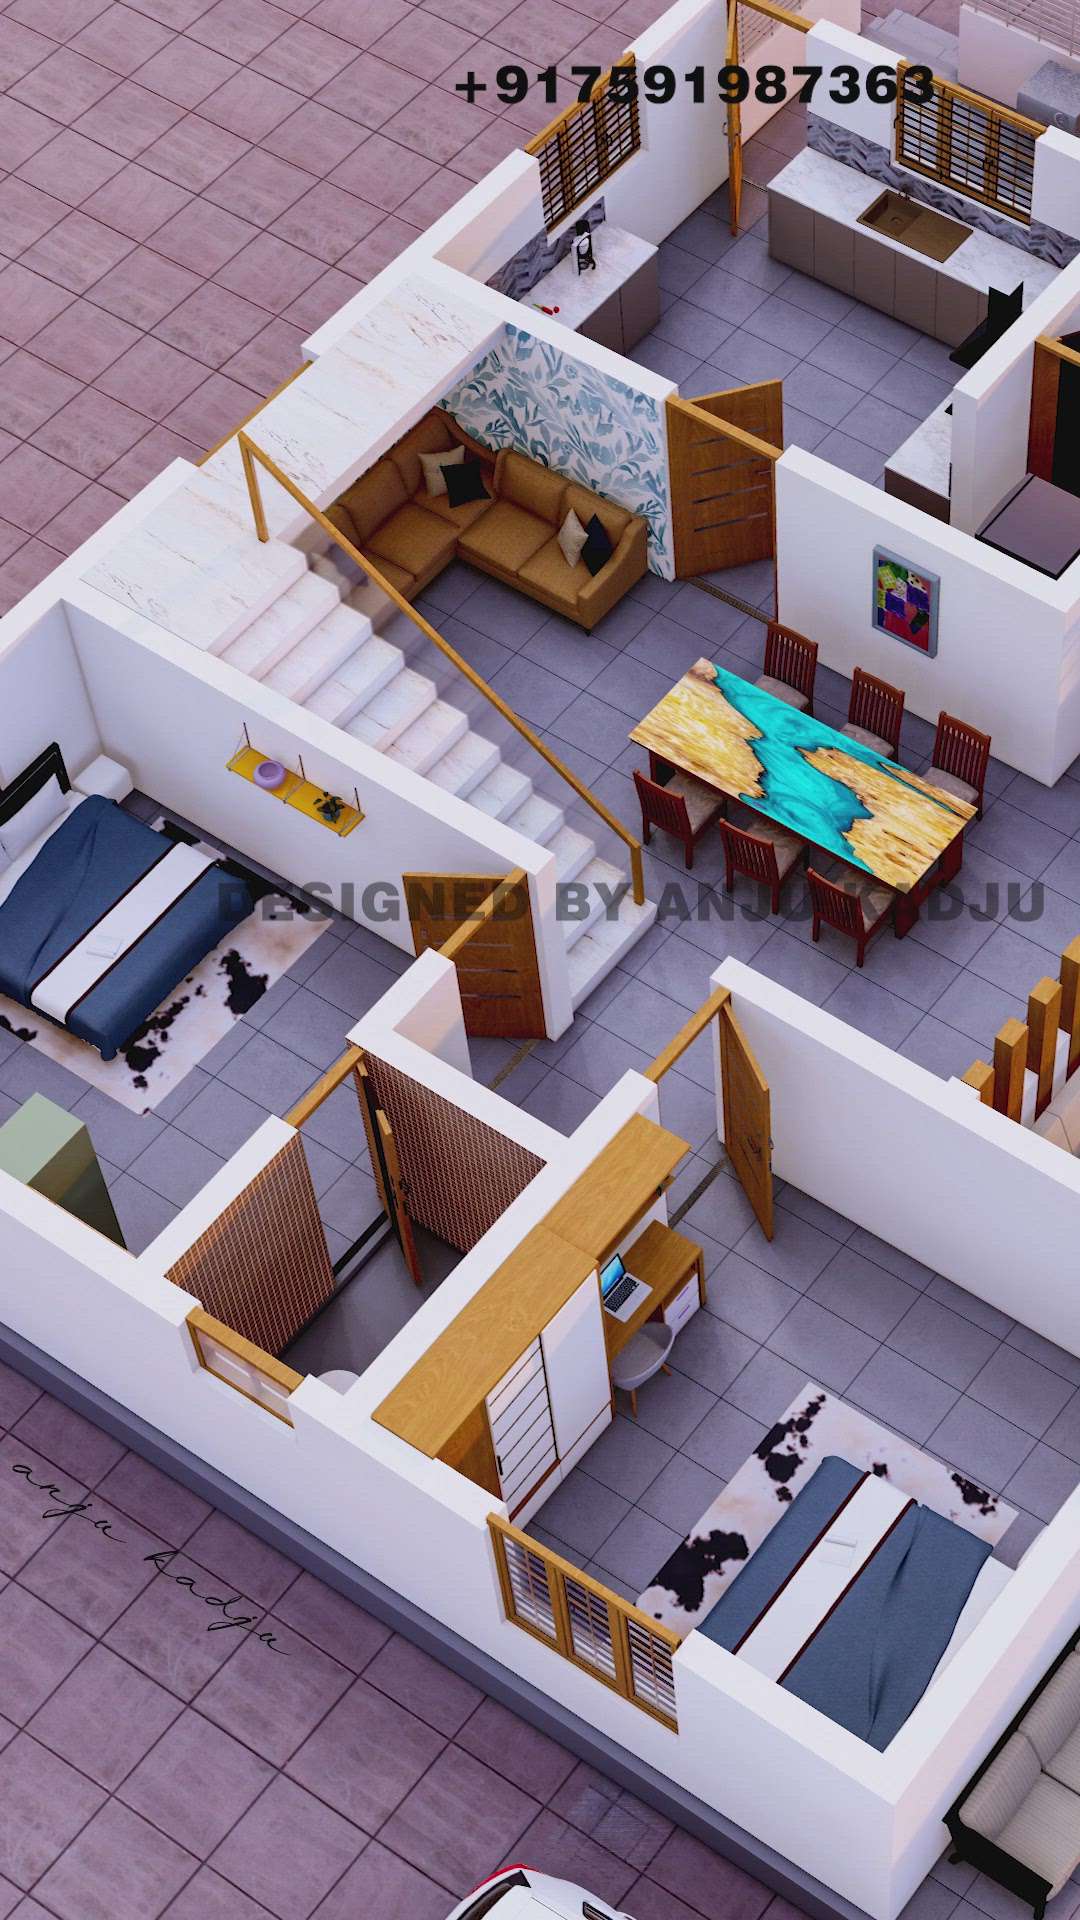 3d floor plan ചെയ്യേണ്ടത്തിന്റെ ആവശ്യകത
Architectural designer: anju kadju
നിങ്ങളുടെ വീട് ഞങ്ങൾക്കൊപ്പം ഡിസൈൻ ചെയ്യാം
 #3DPlans #3Dfloorplans #Best_designers #best_architect #Online #online3dservice